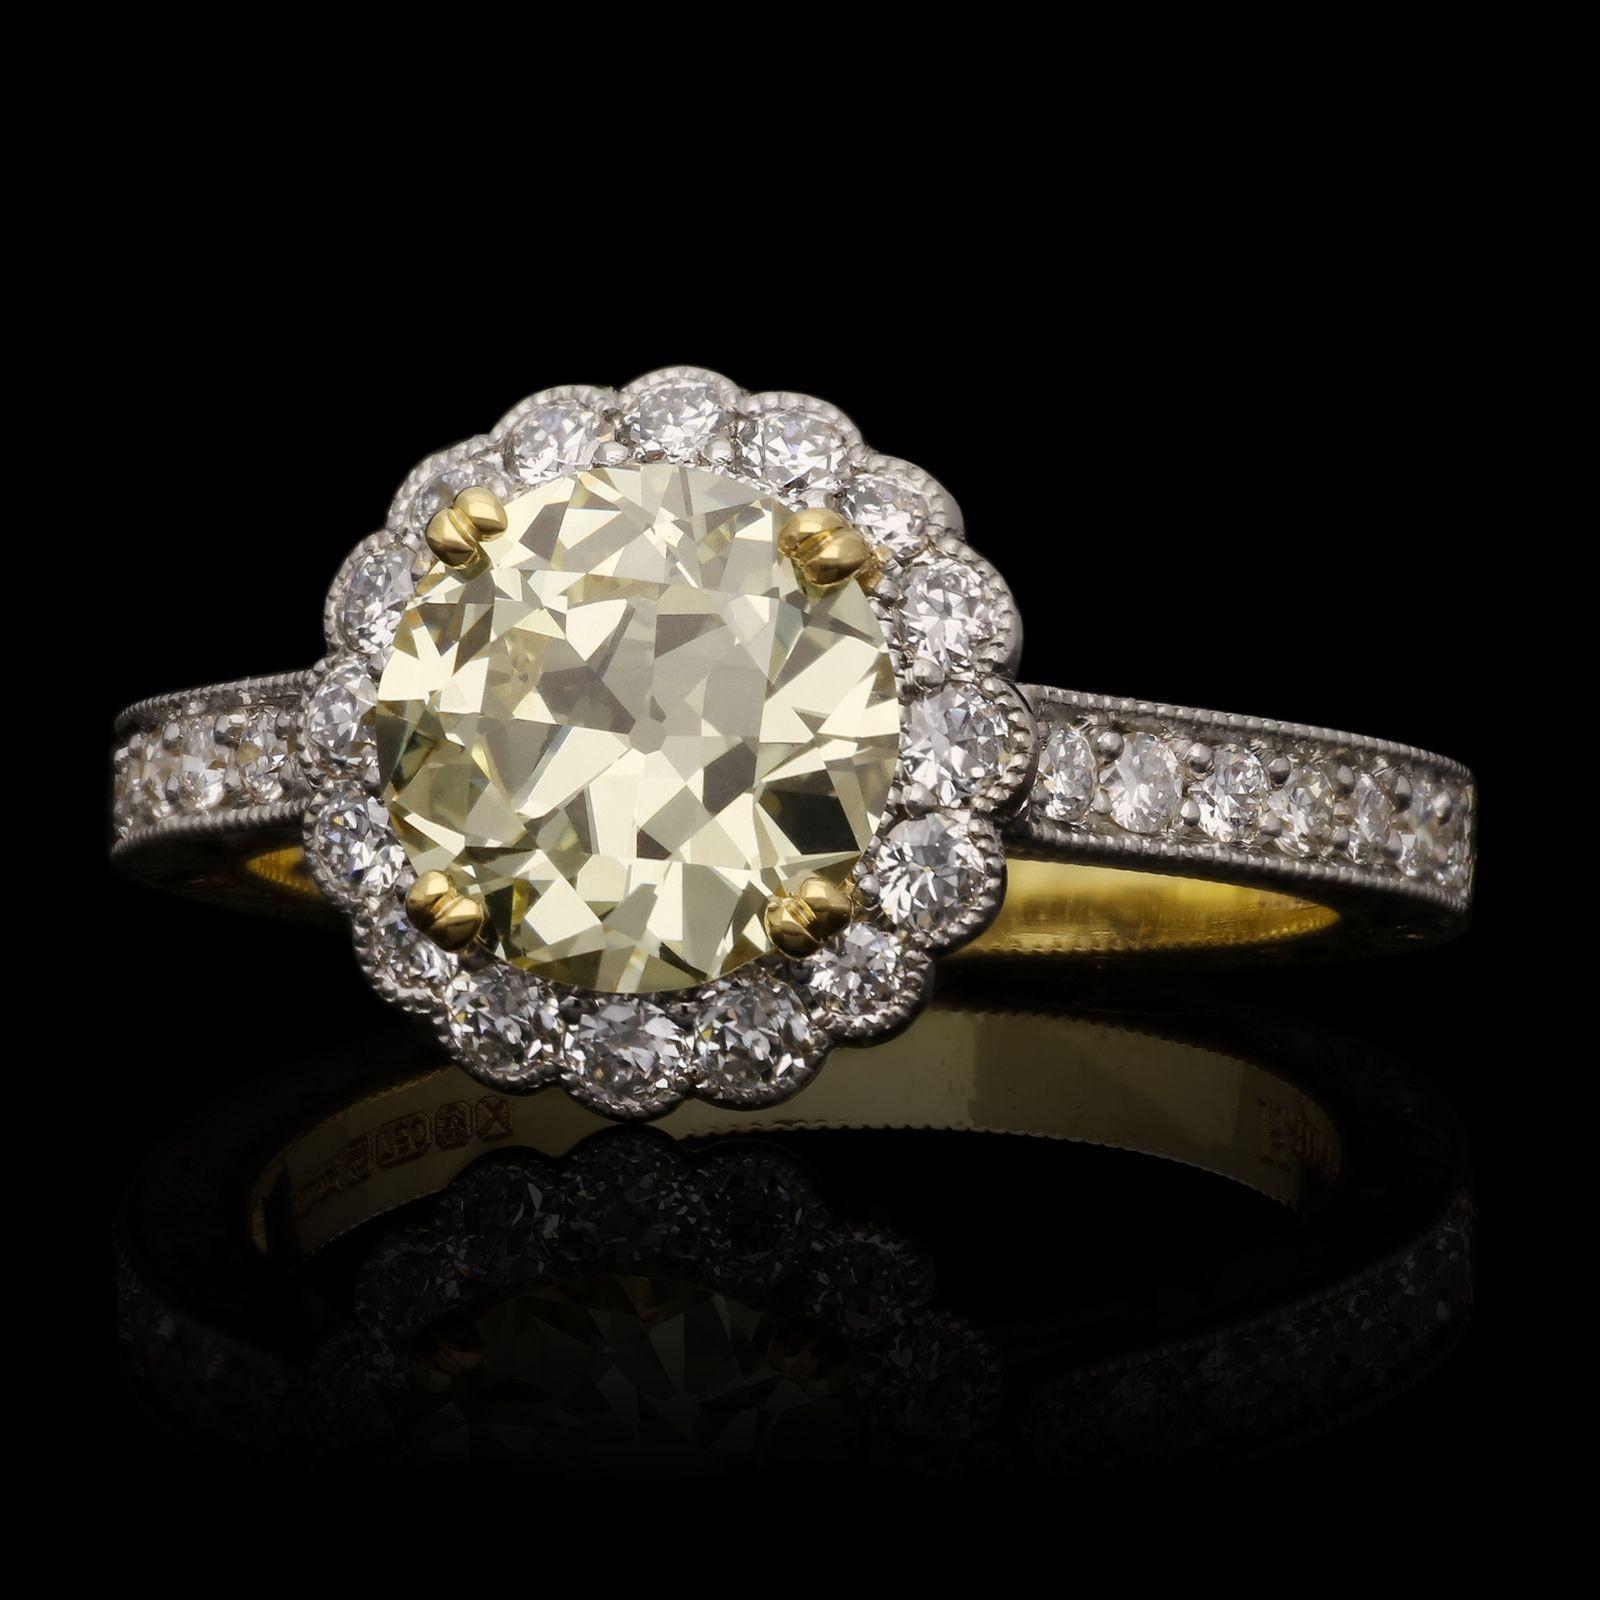 Hancocks 1.62ct Old European Brilliant Cut Diamond Ring with Diamond Halo In New Condition For Sale In London, GB